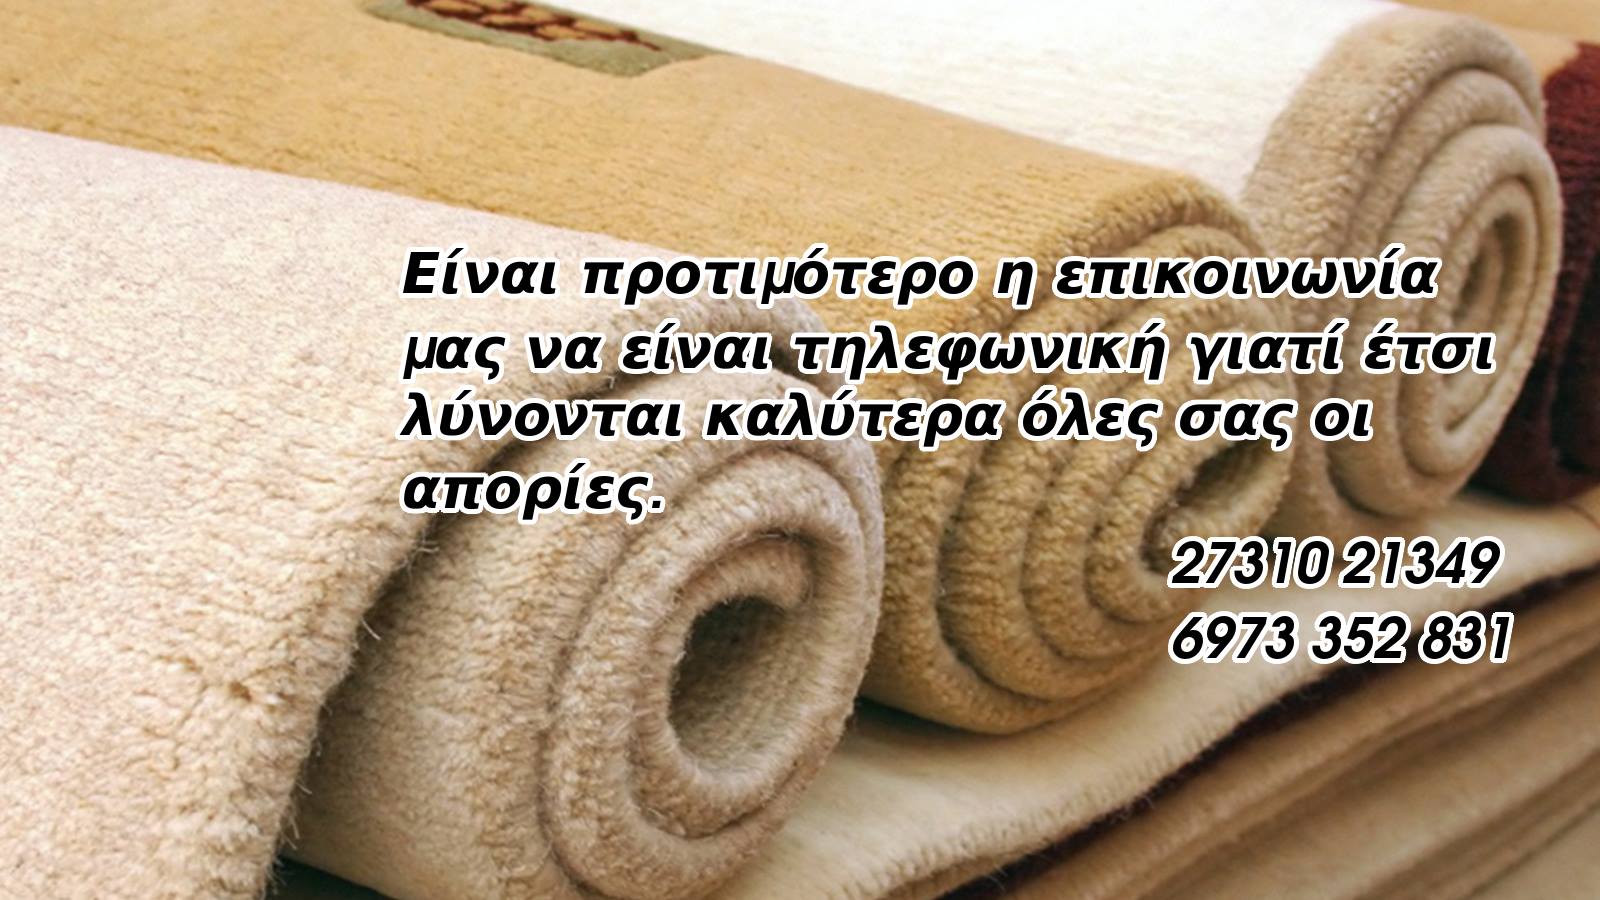 Kαθαριστήρια Evrotas Clean Λυκούργου 30, Σπάρτη 27310 21 349